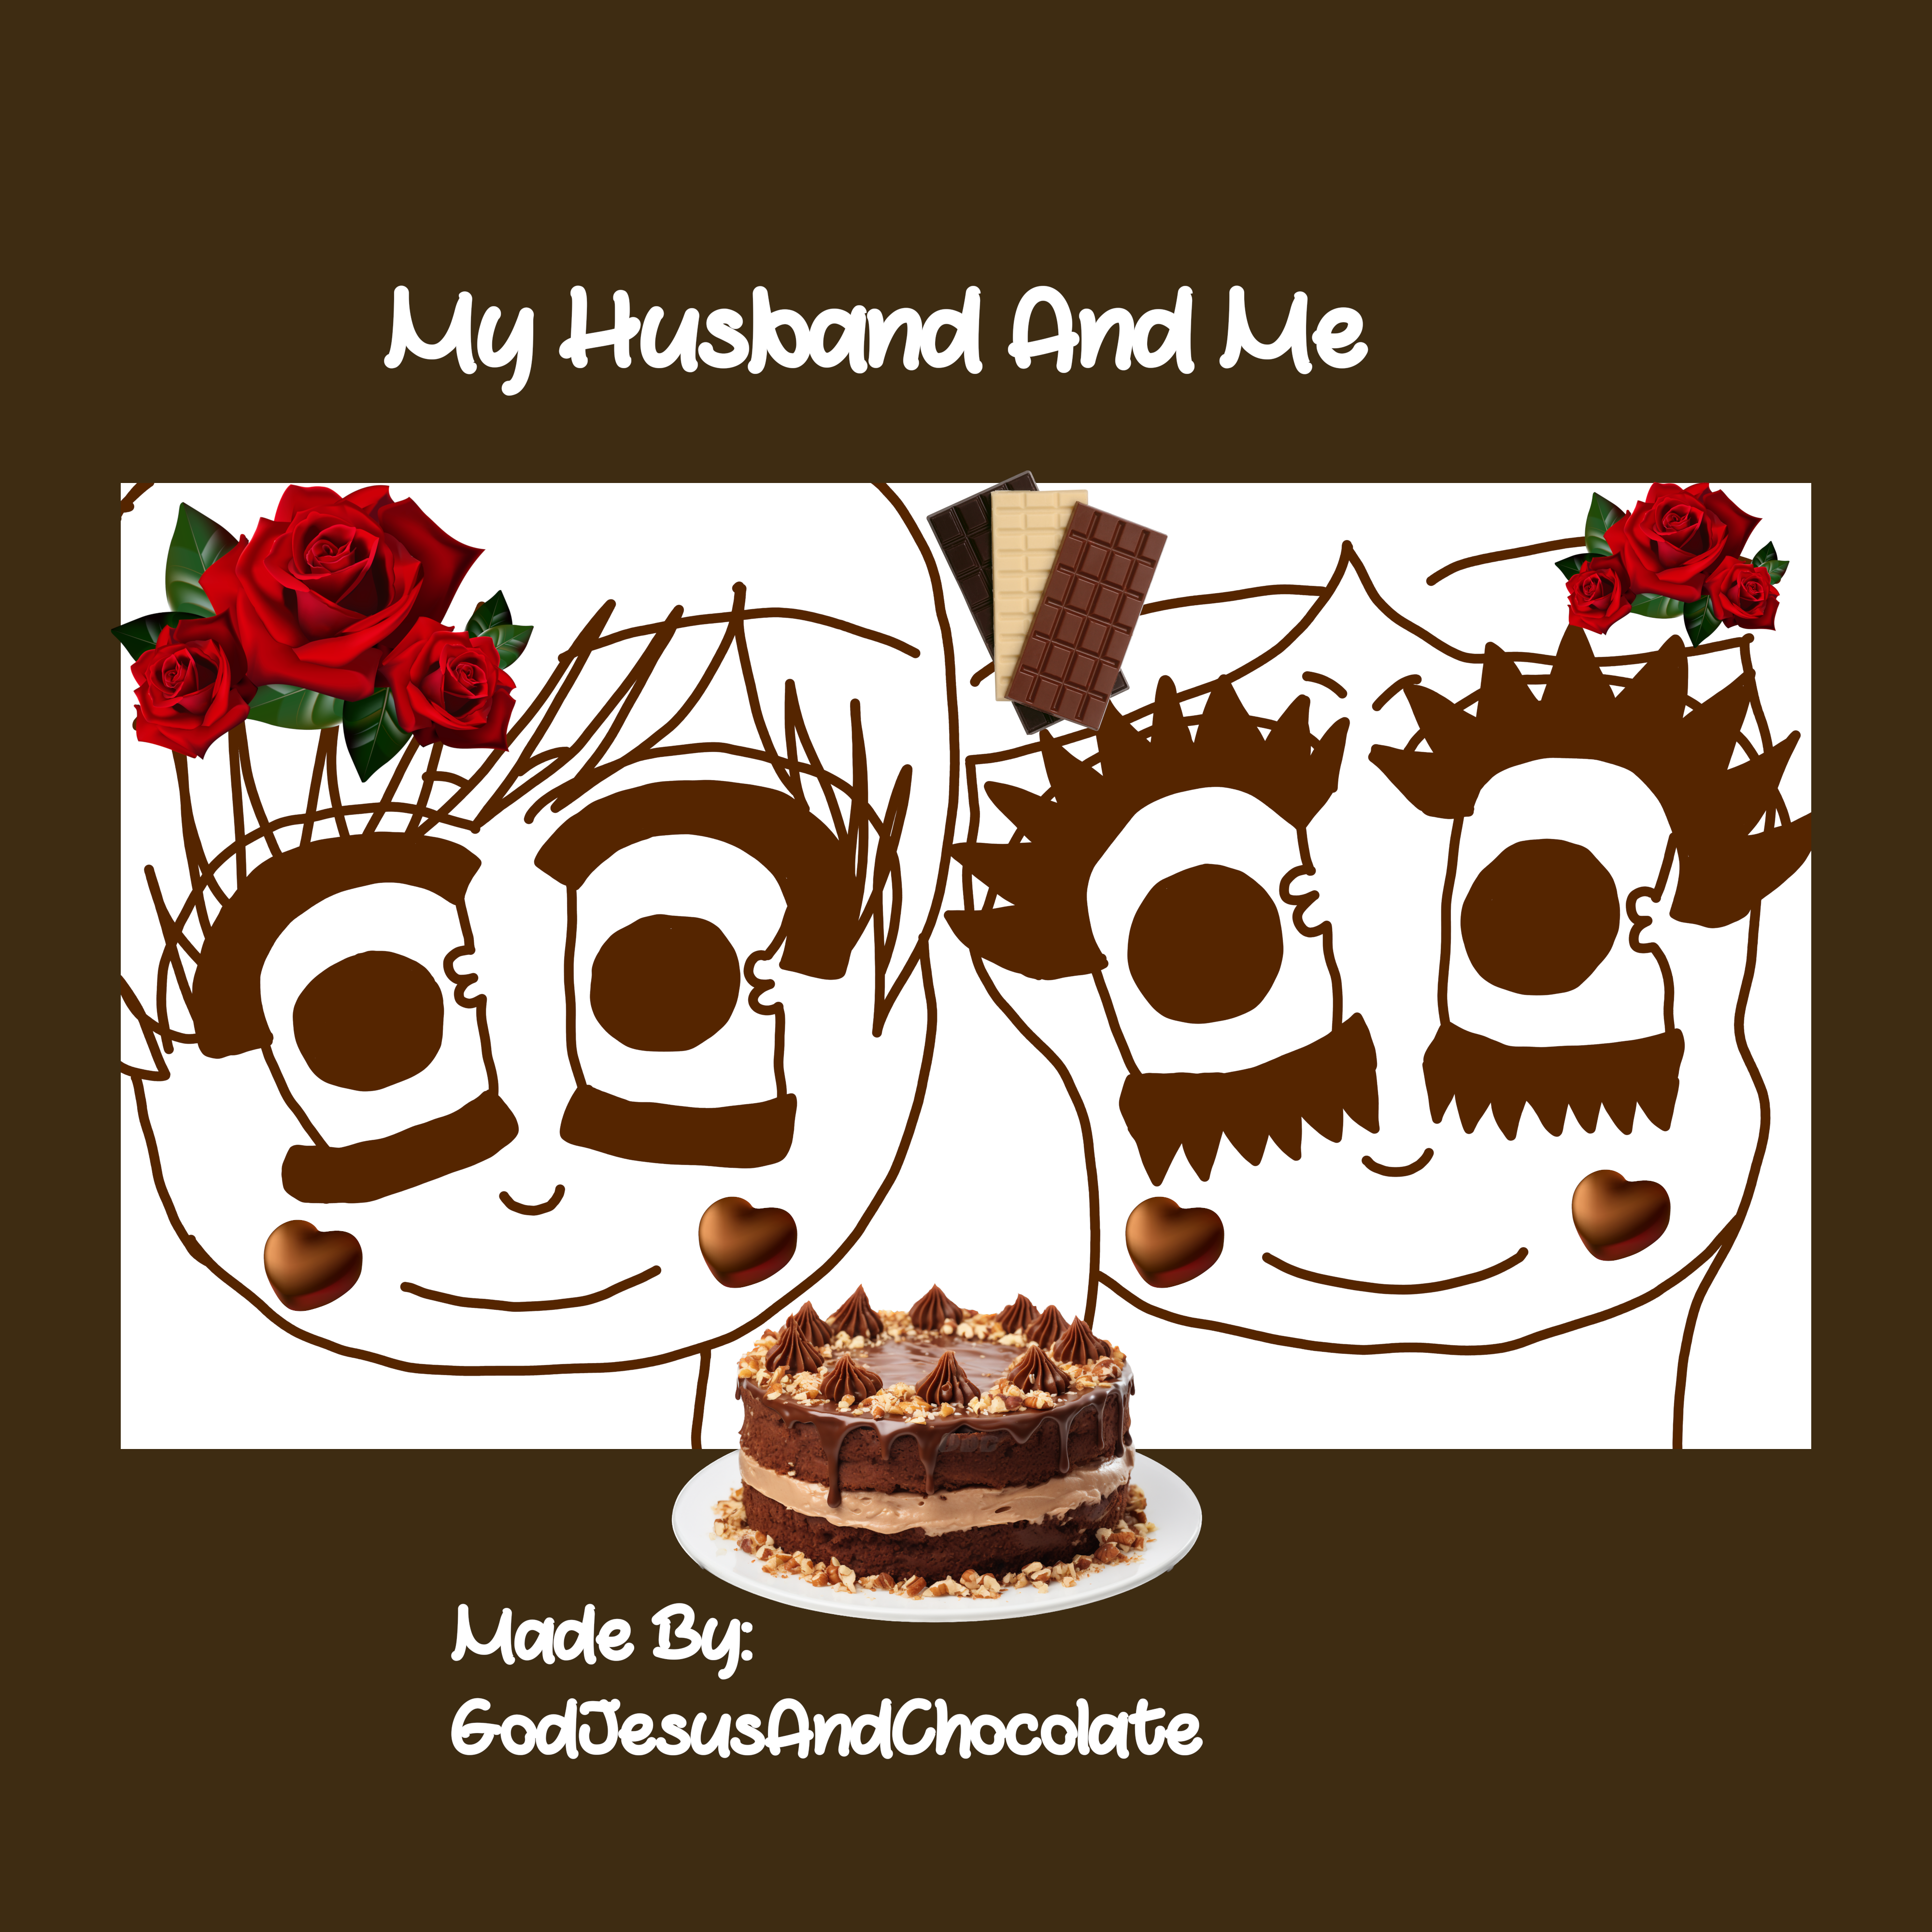 My Husband And Me Digital Art Chocolate Krita Gimp XP-Pen Alienware 1 German Chocolate Cake Re...png